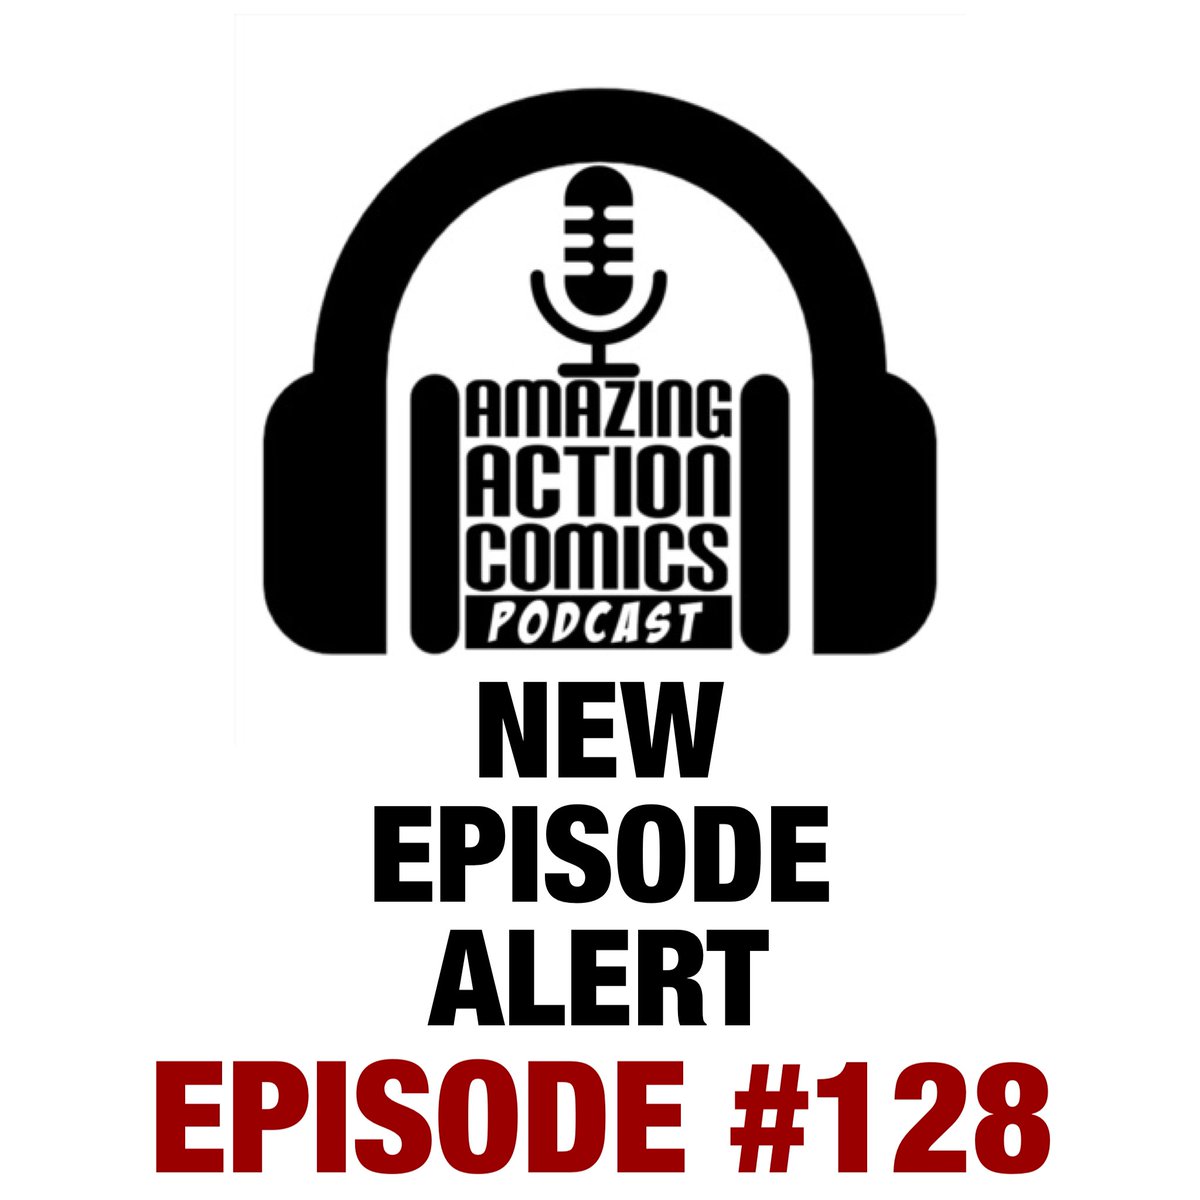 Get on it! #Anchorpodcast #podcast #applepodcast #spotifypodcast #amazingactioncomics #comics #indiecomics #independentcomics #readsomethingamazing